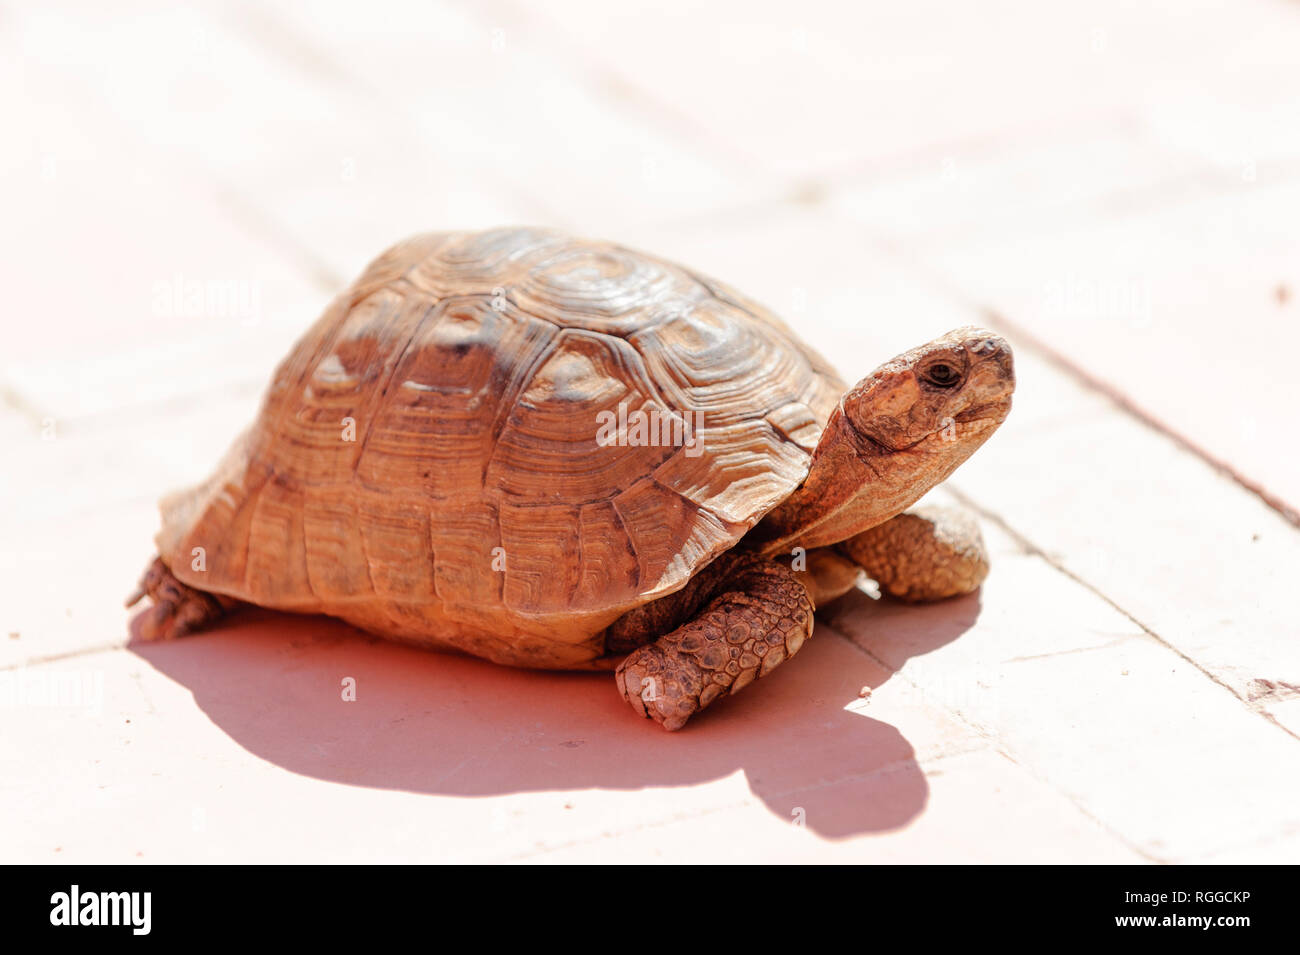 05-03-15, Marrakech, Morocco. The Riad Porte Royale. A tortoise that lives on the terrace. Photo: © Simon Grosset Stock Photo